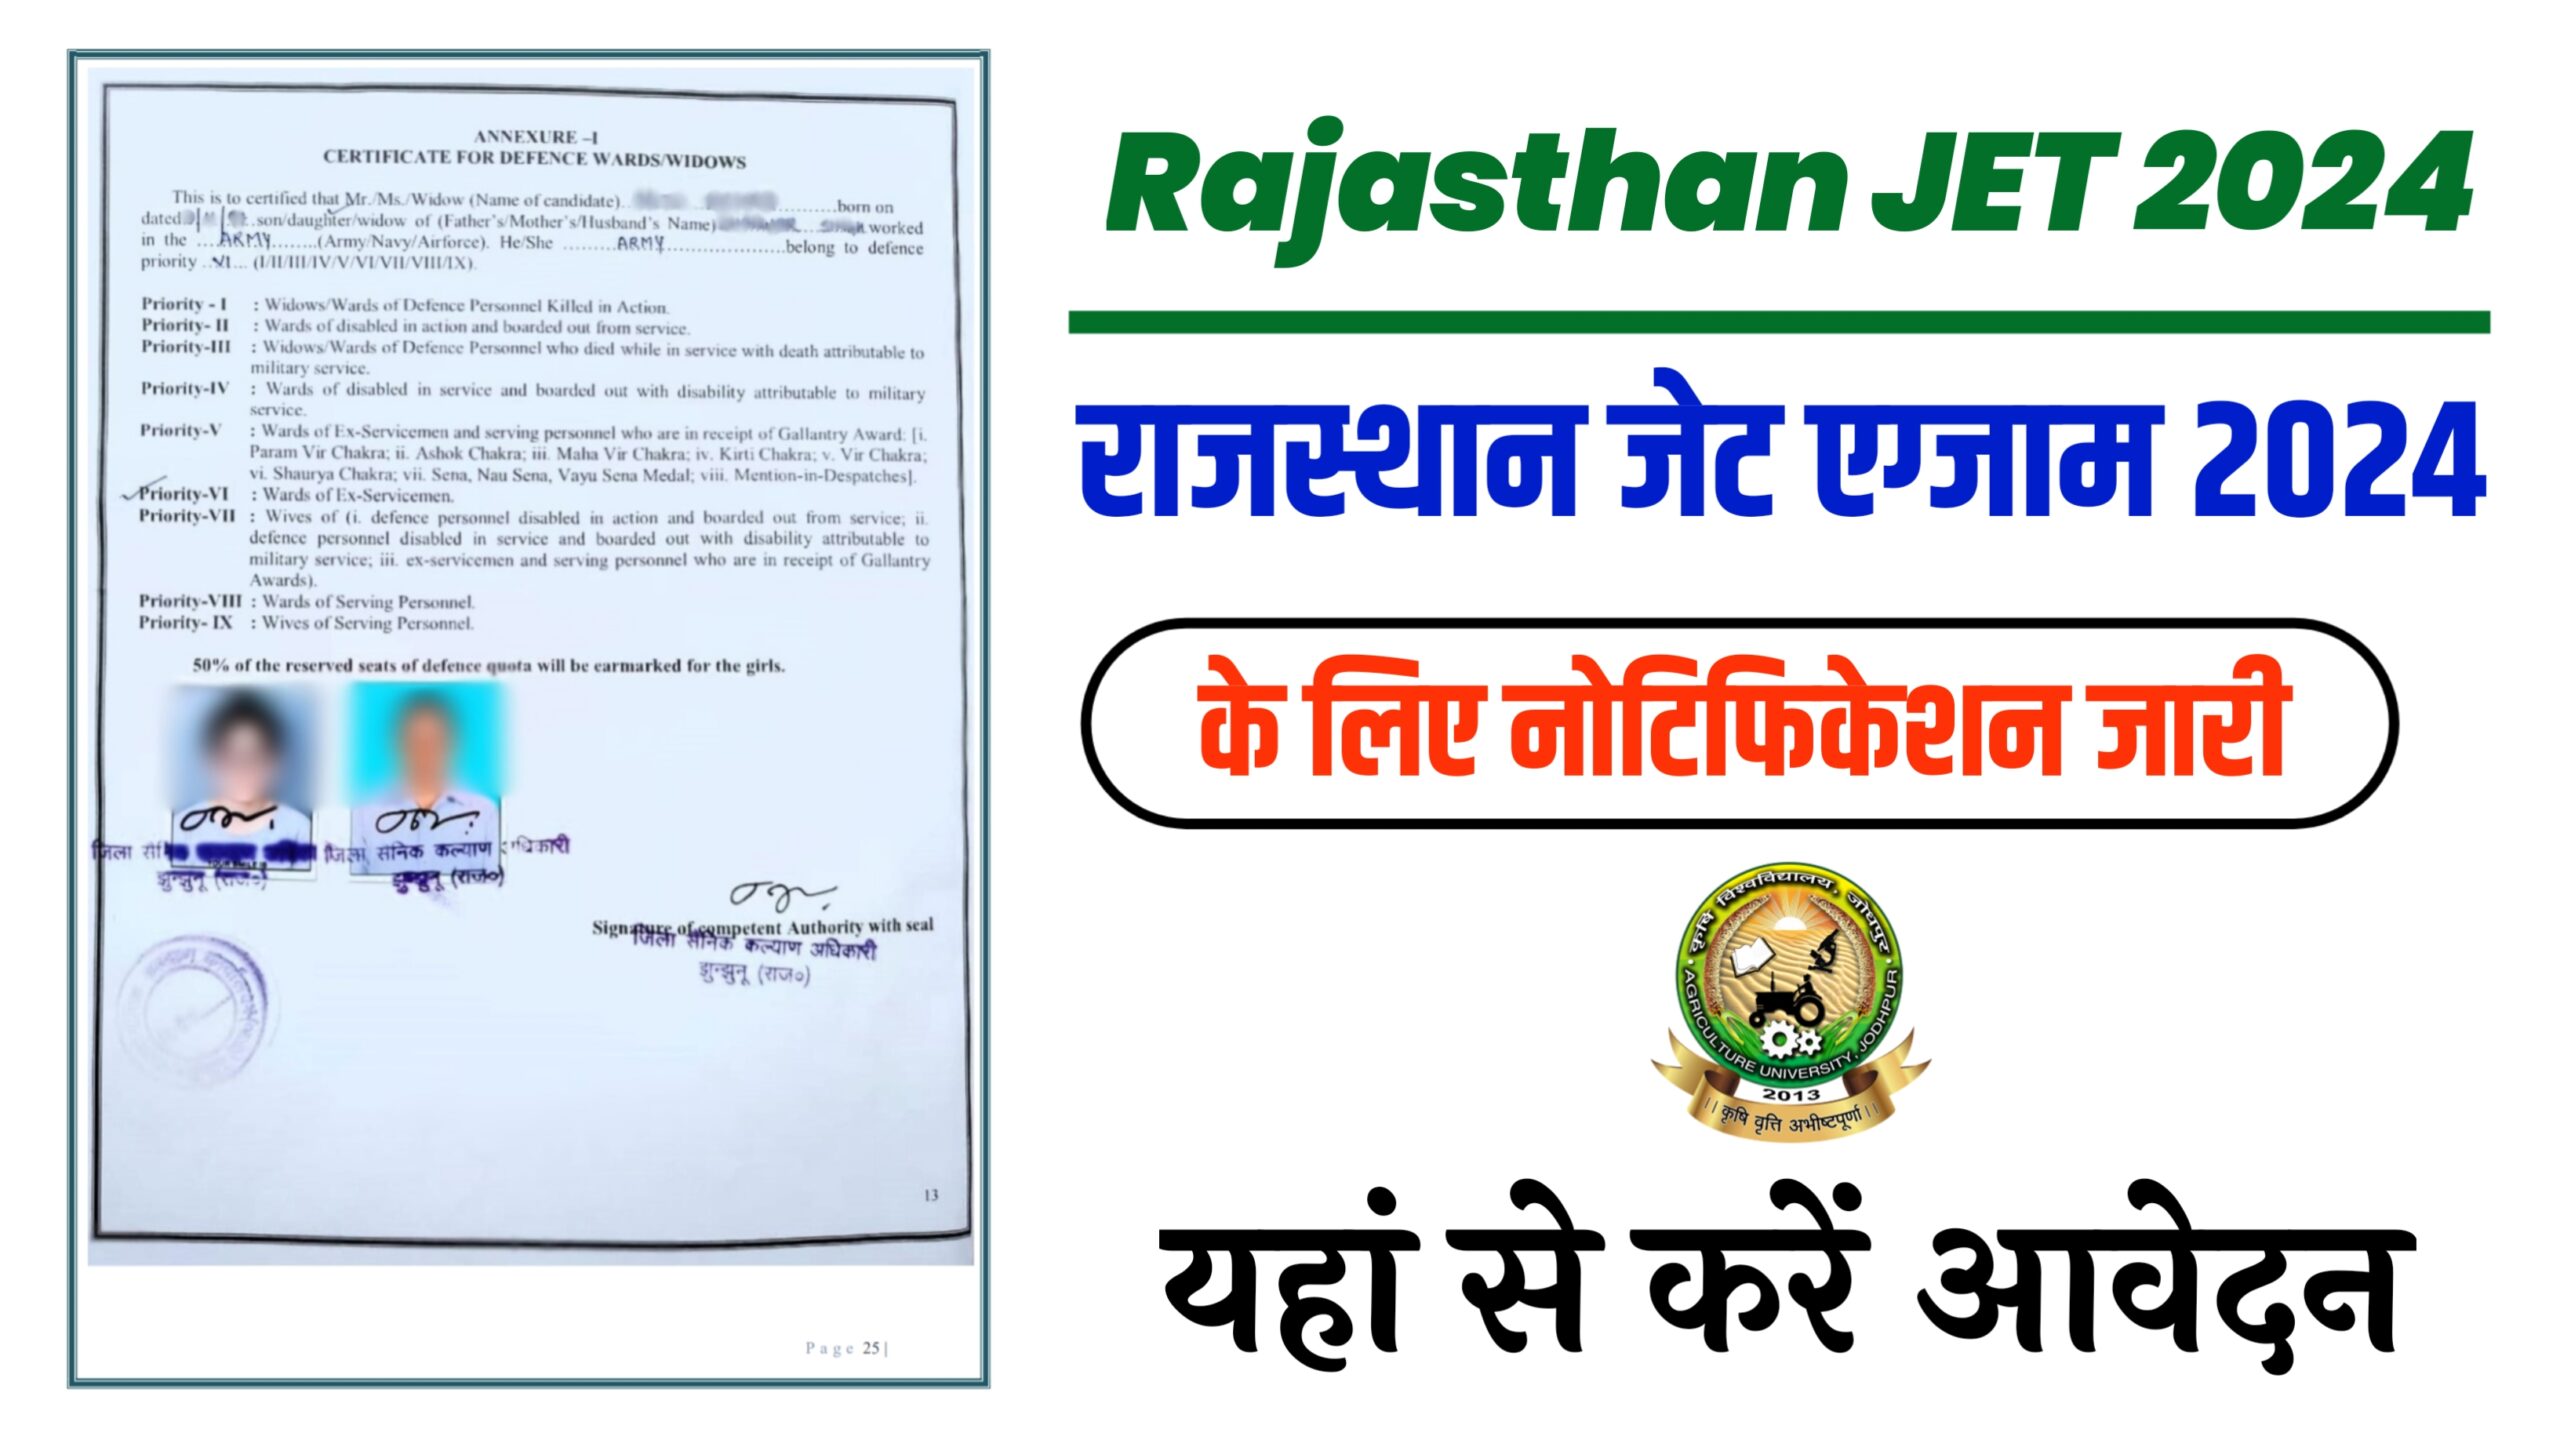 Rajasthan JET 2024